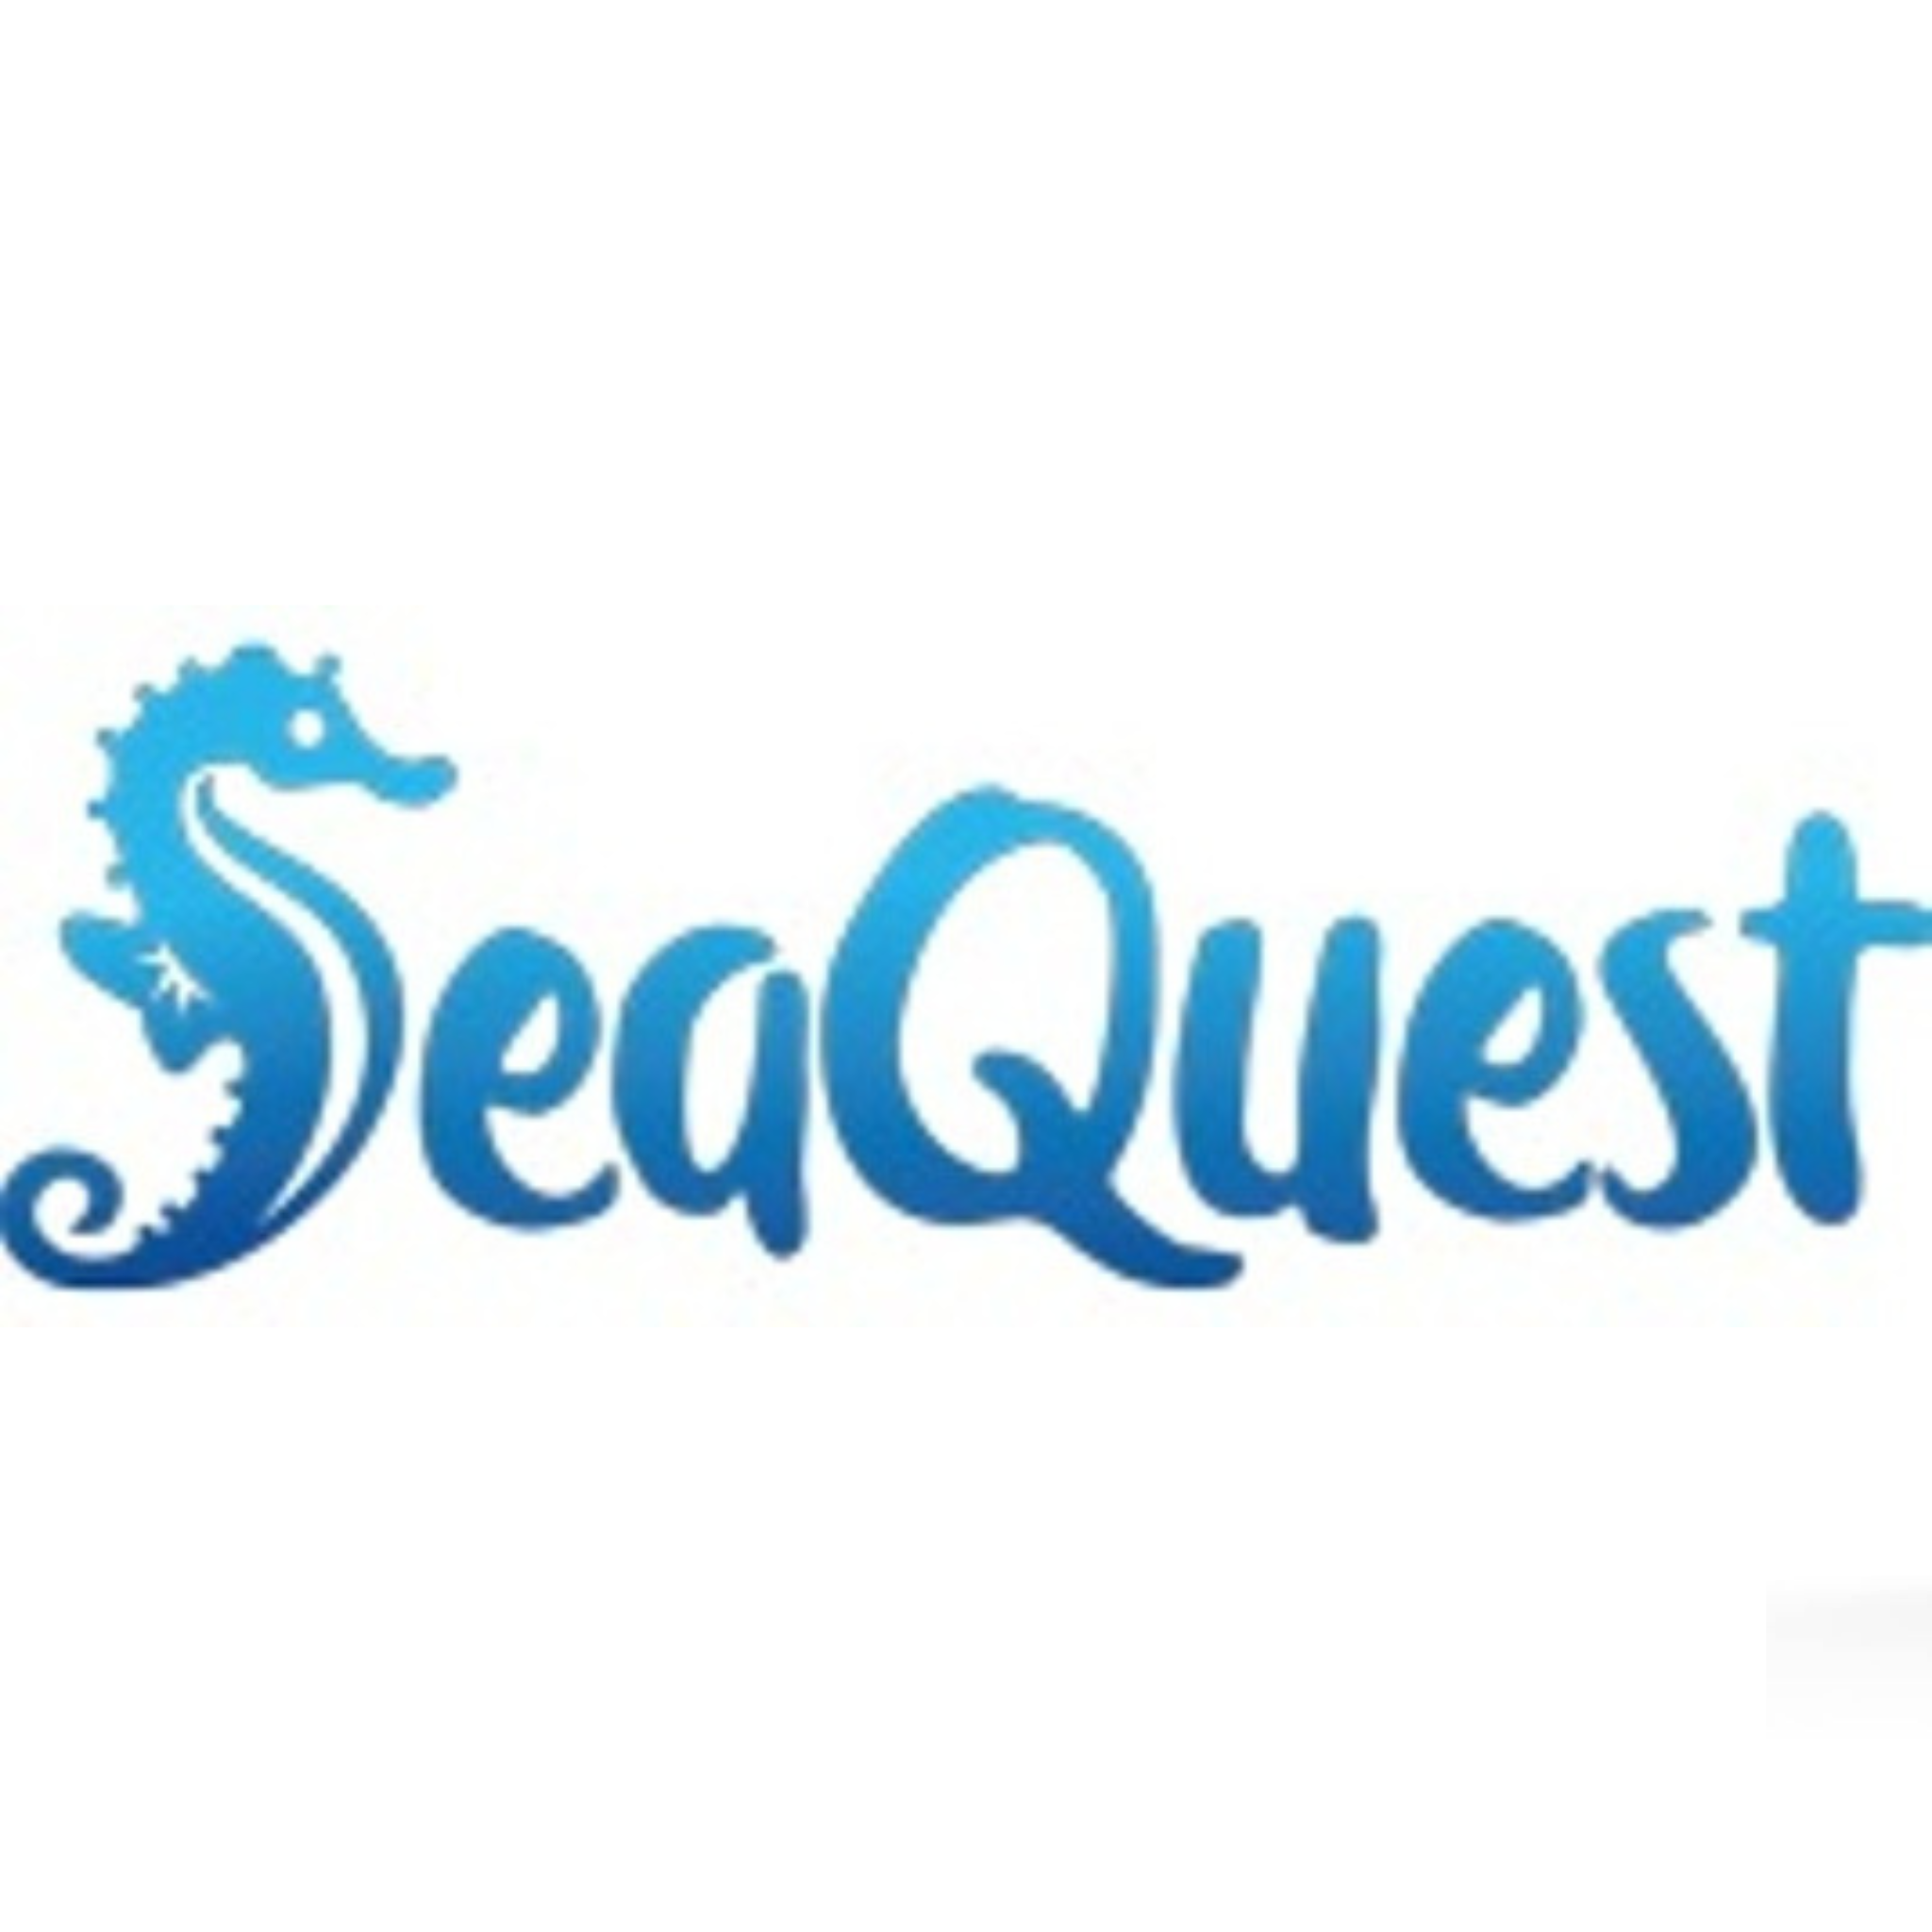 Get Free Admission To SeaQuest Aquariums